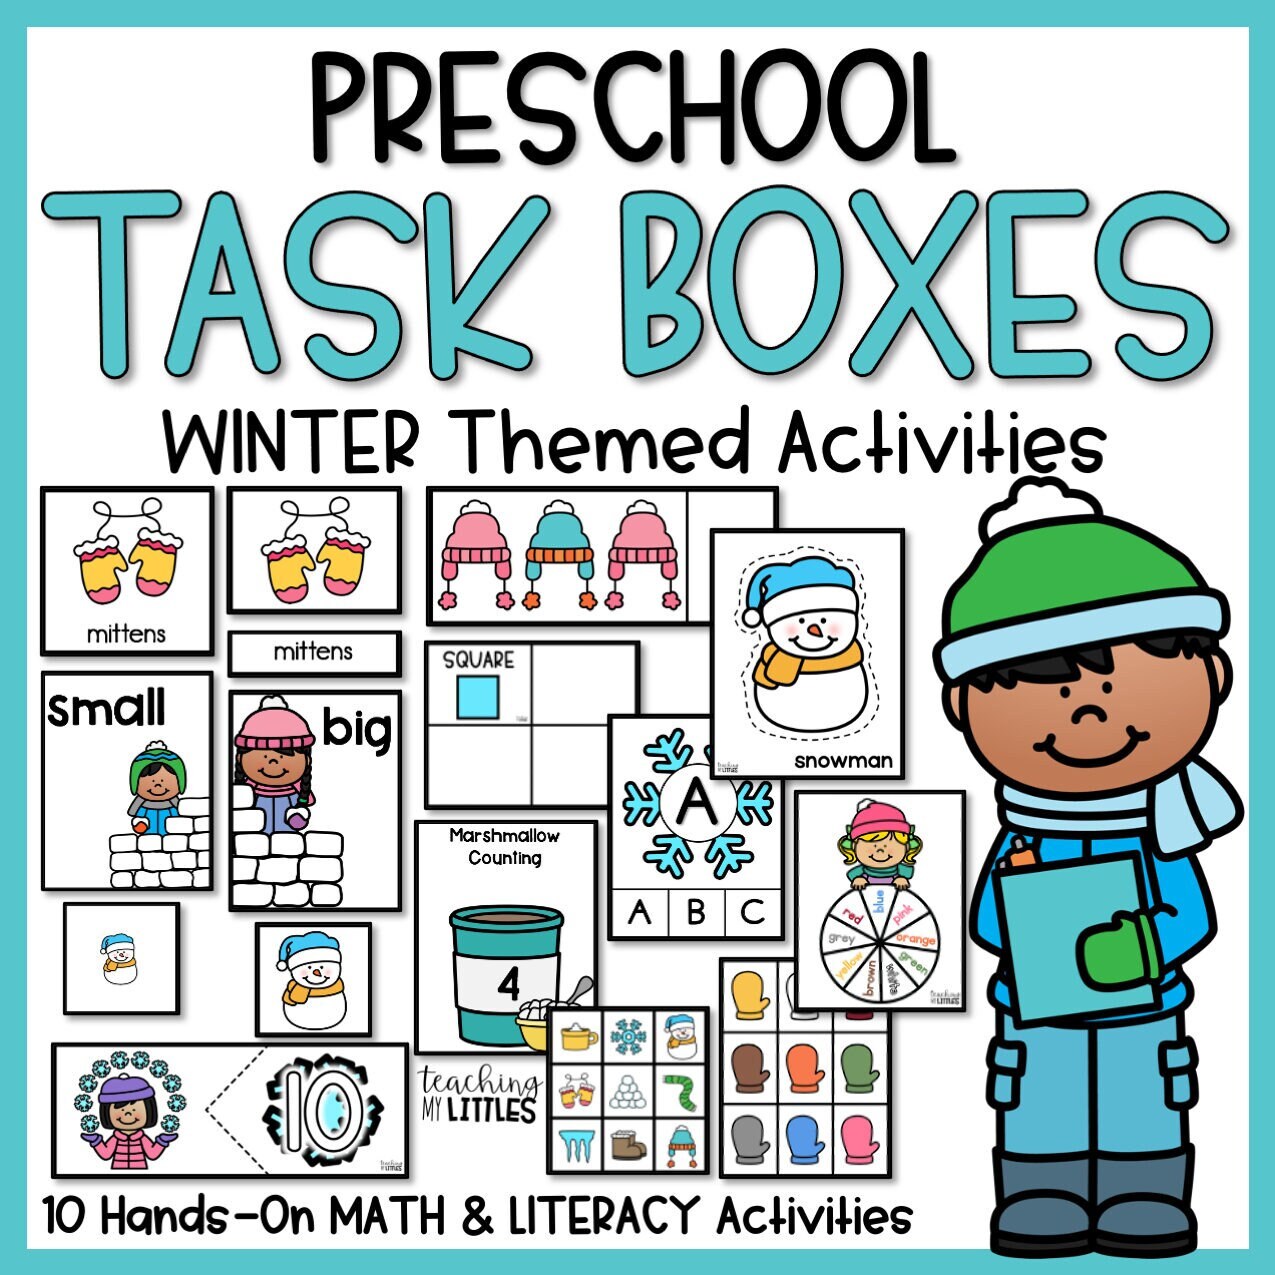 Kindergarten Task Boxes - www.